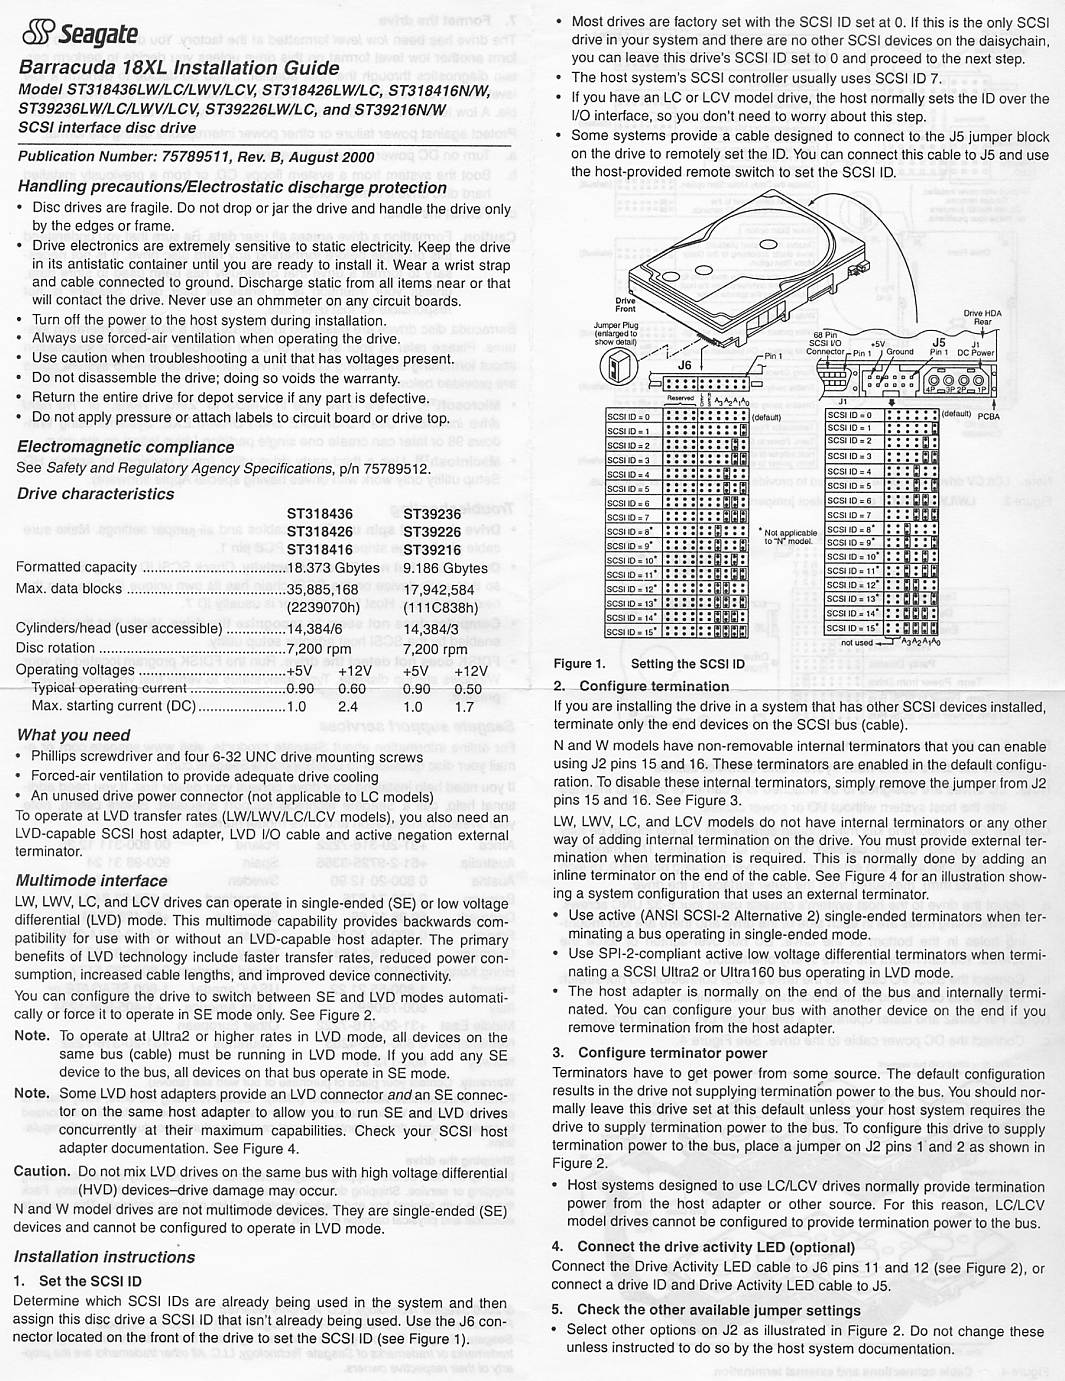 Seagate Barracuda SCSI HDD Barracuda 18XL Installation guide (SCSI HDD)